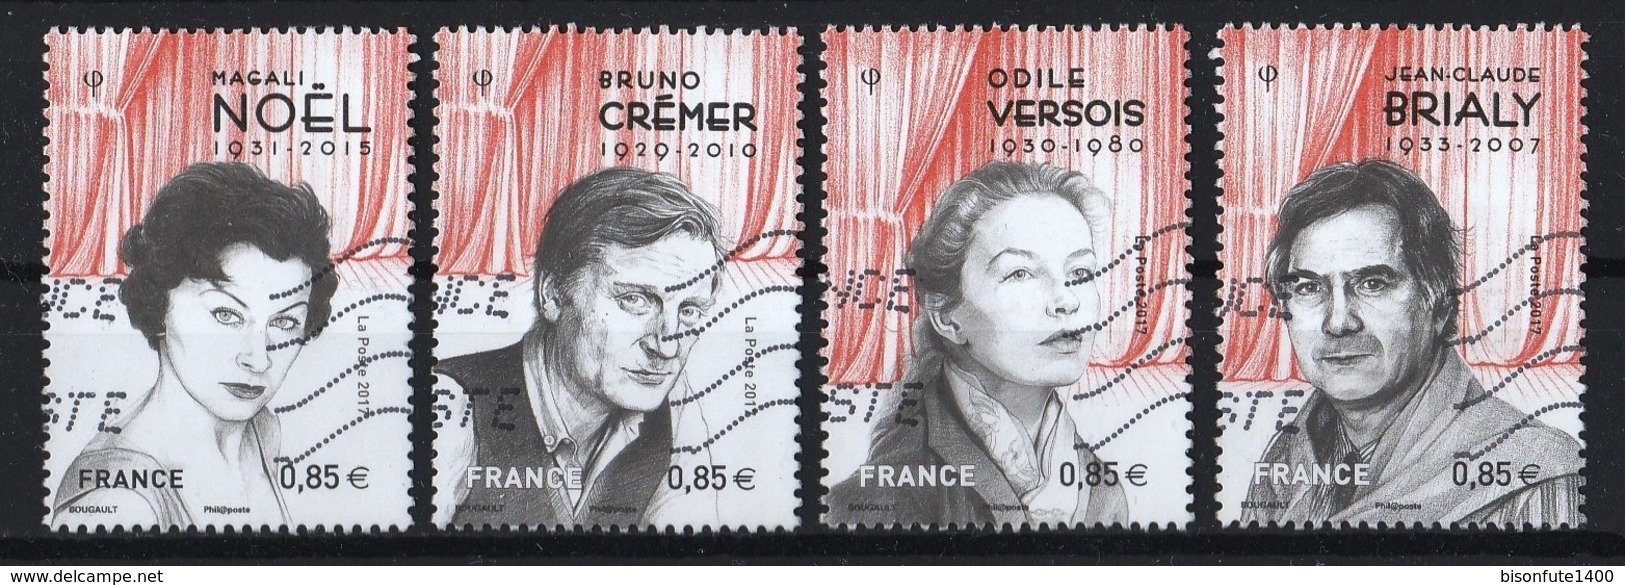 France 2017 : Timbres Yvert & Tellier N° 5174 - 5175 - 5176 Et 5177 Avec Oblit. Mécaniques. - Used Stamps